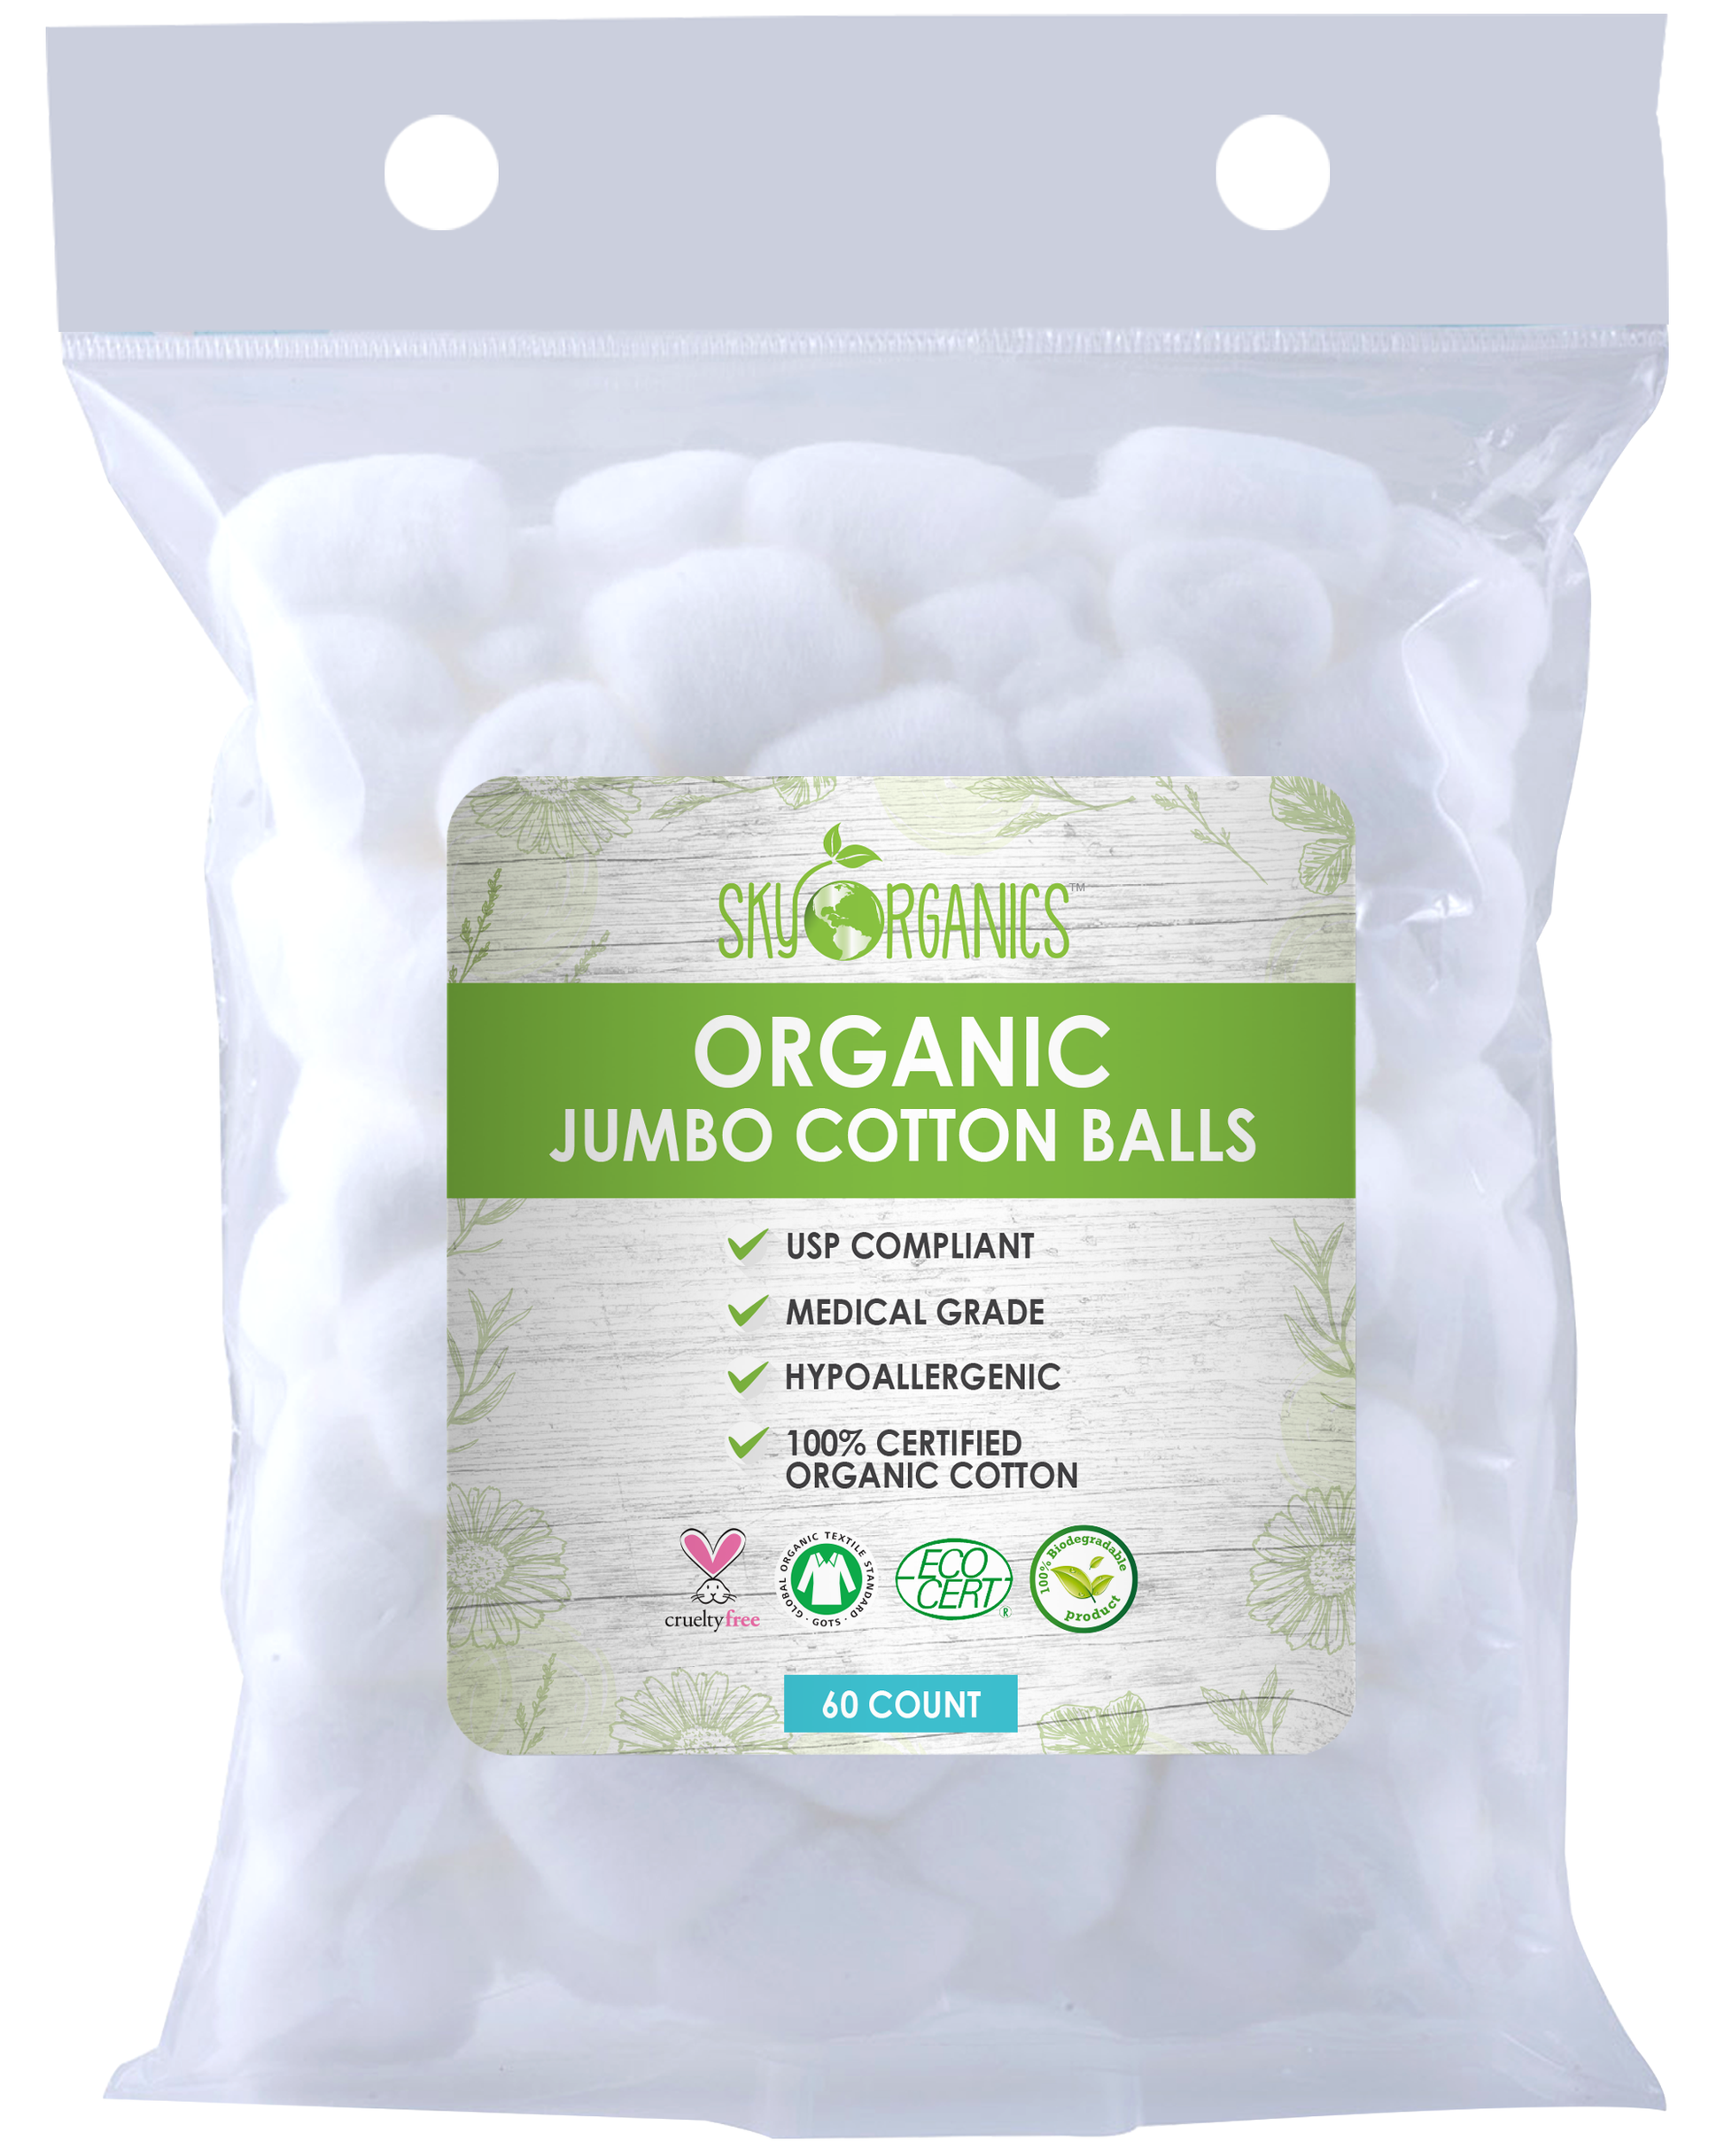 Sky Organics Organic Cotton Rounds, 100 count